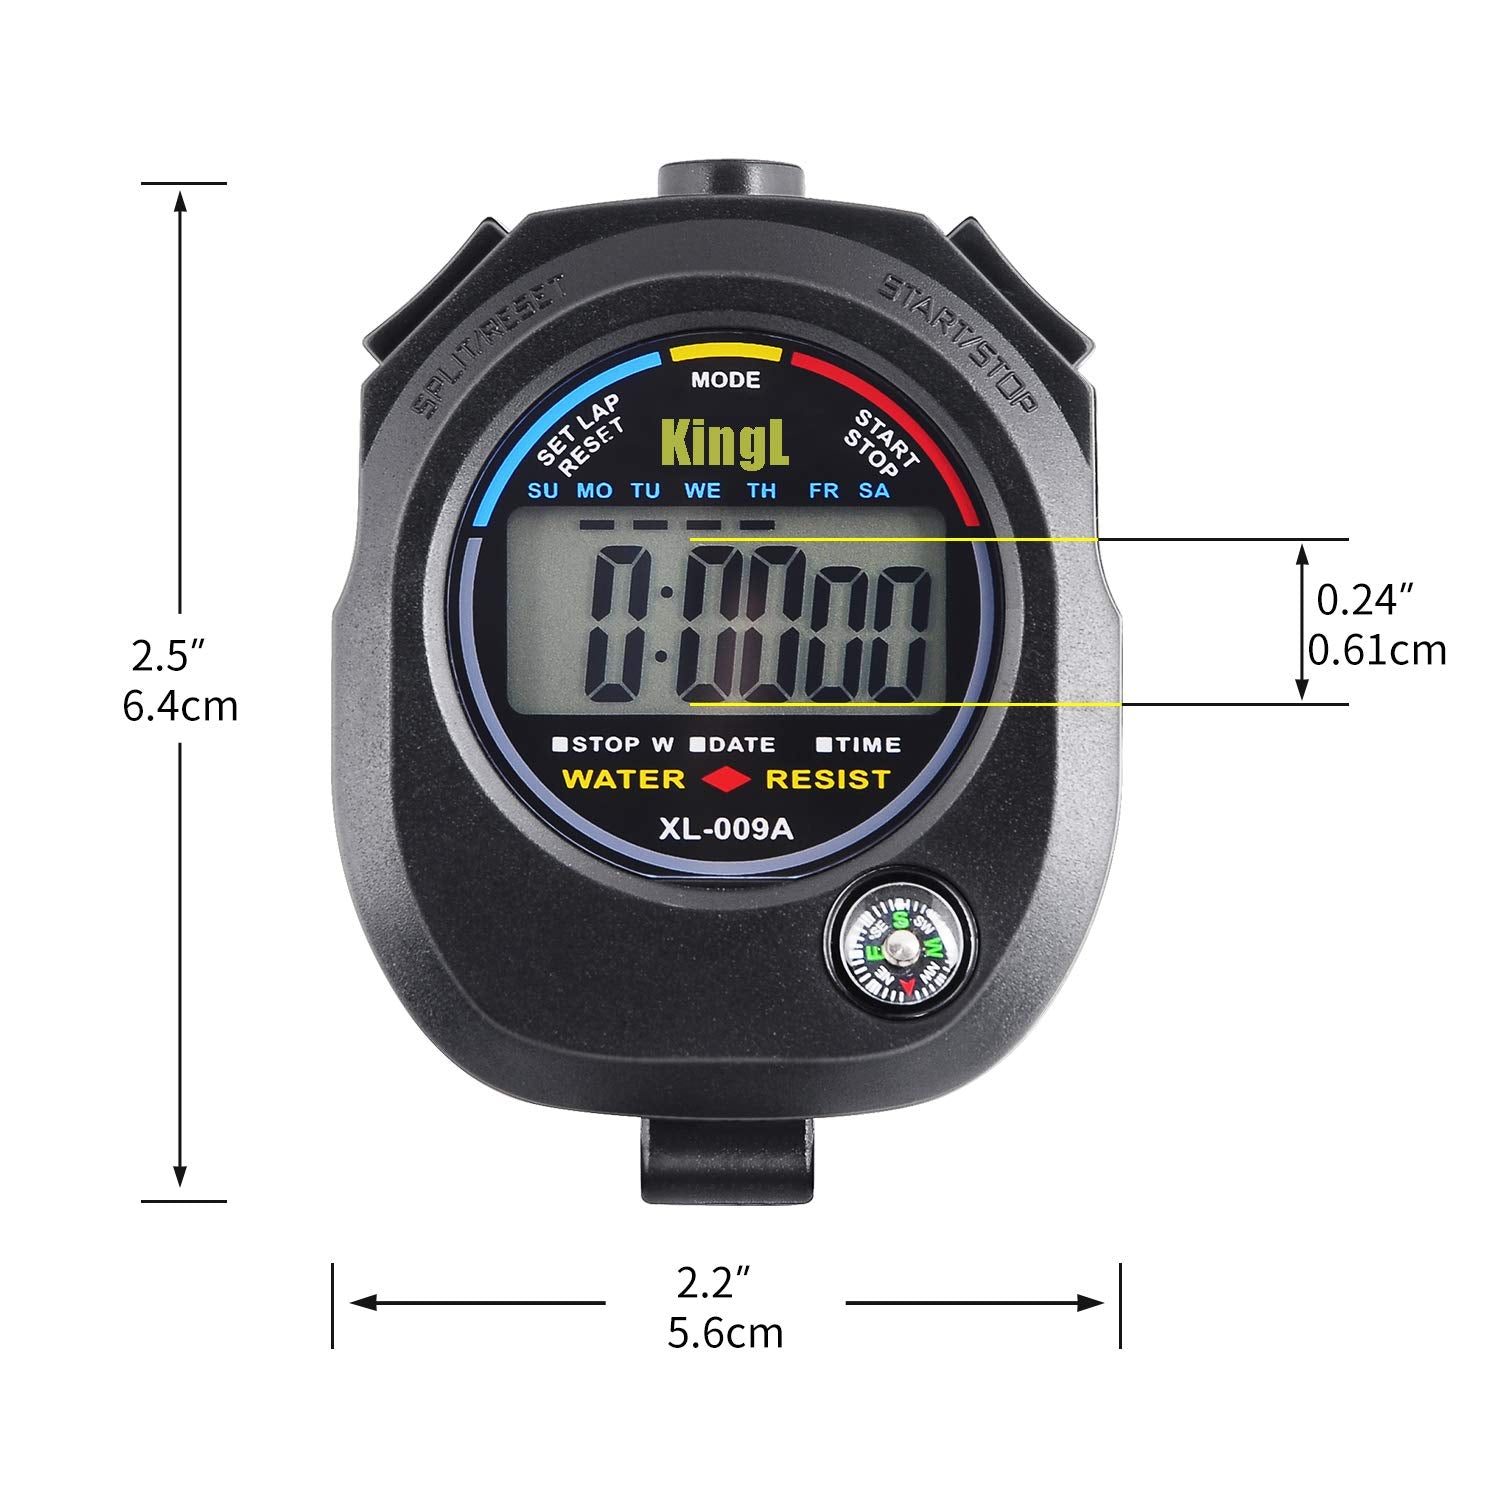 KingL Digital Stopwatch Timer - Interval Timer with Large Display